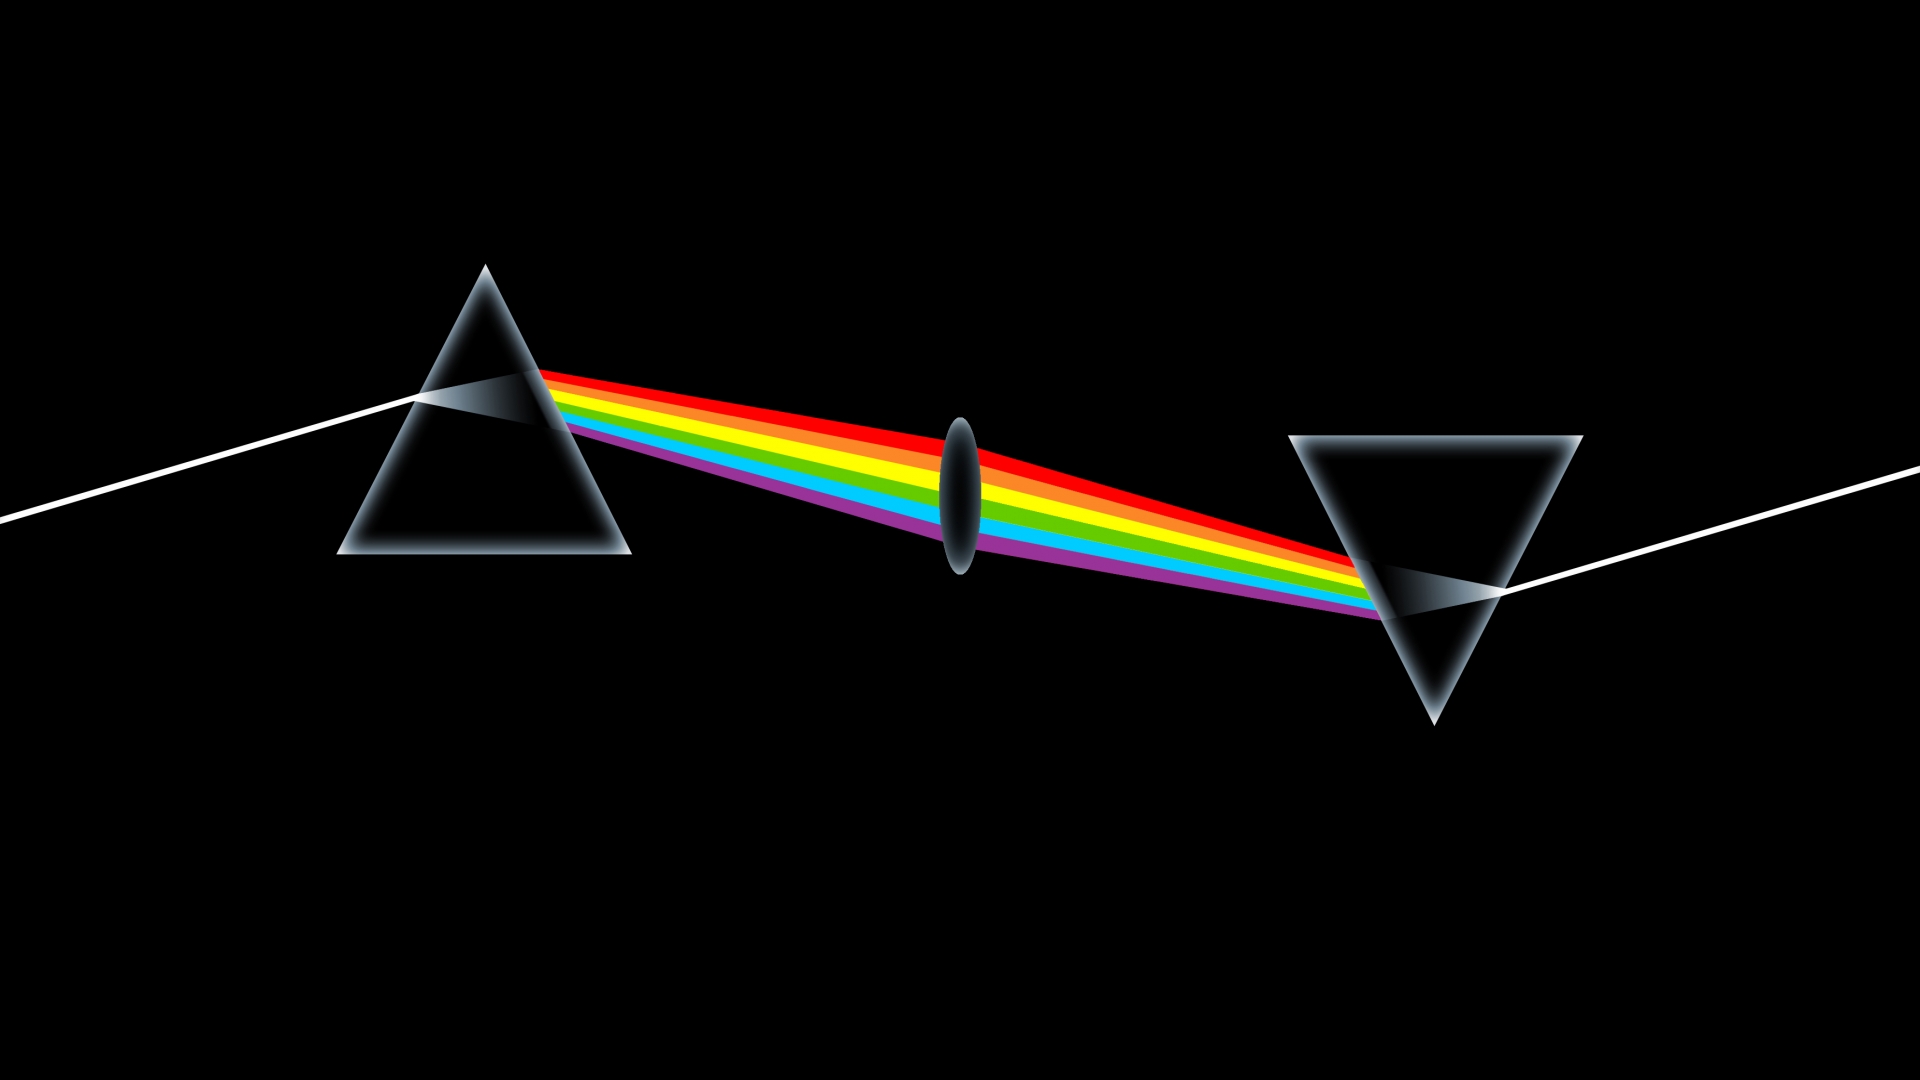 Pink Floyd hard rock classic retro bands groups album covers logo wallpaperx1080